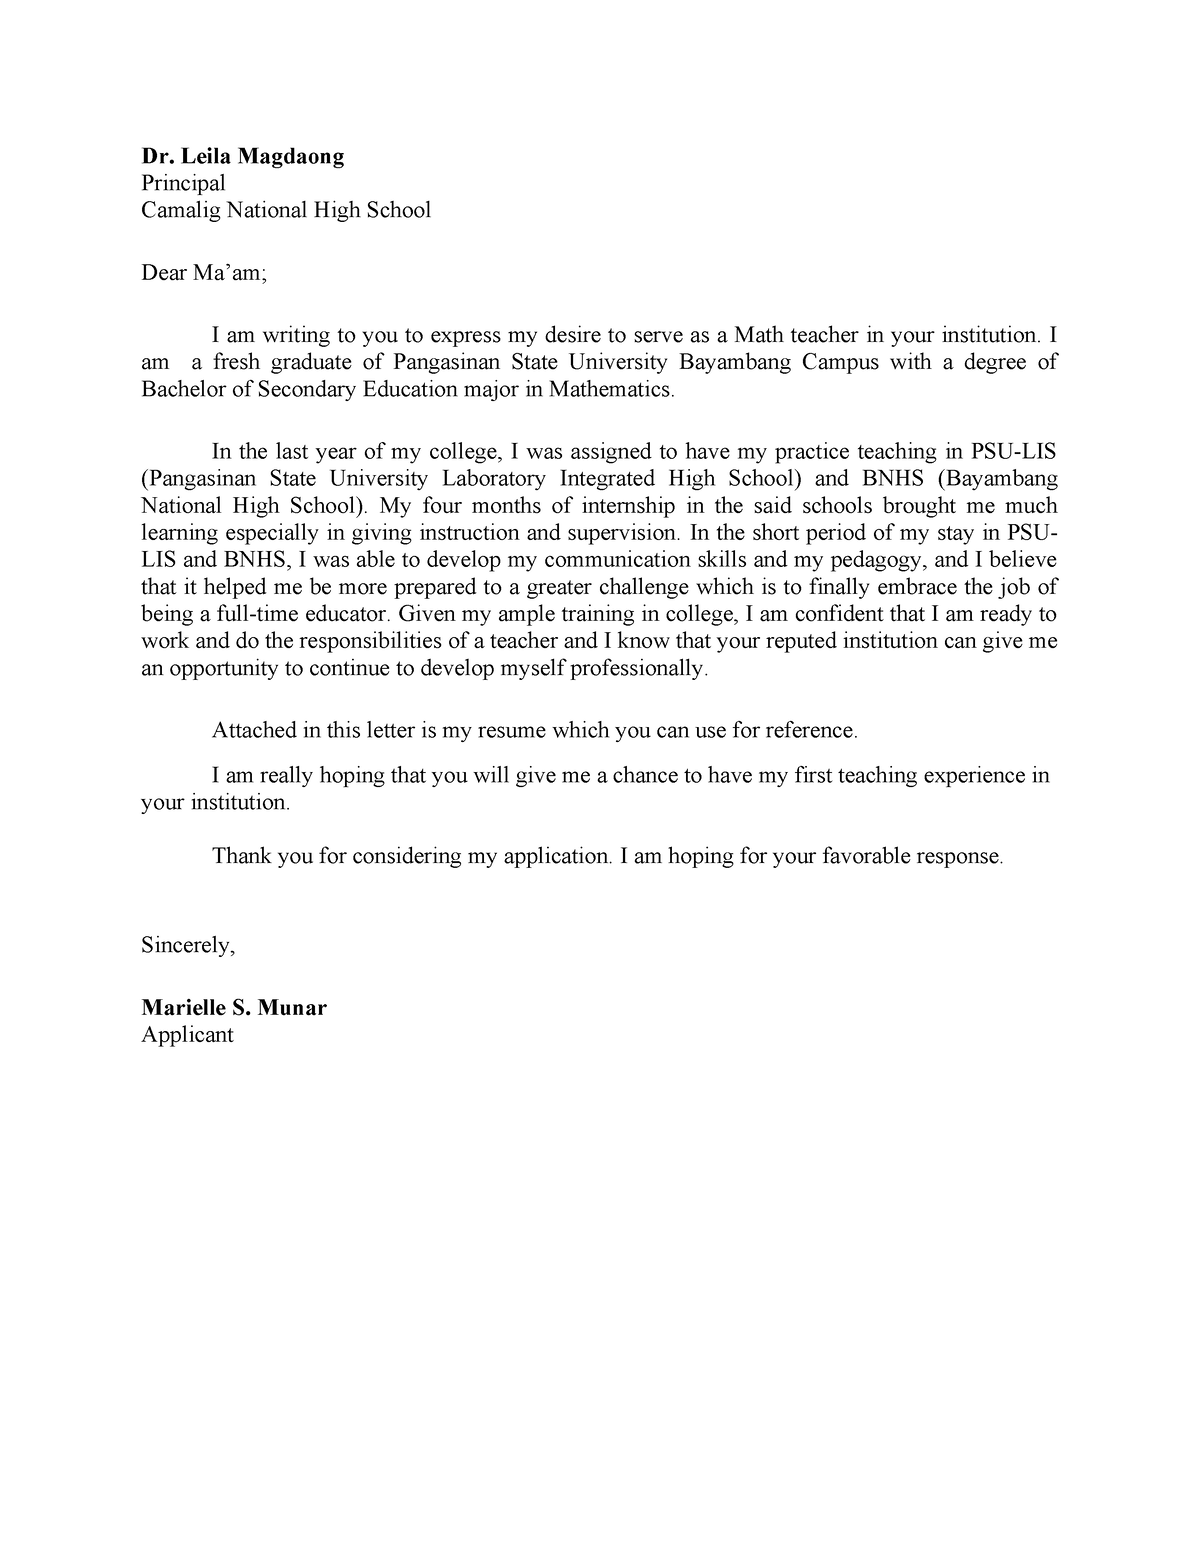 Application letter - Dr. Leila Magdaong Principal Camalig National High ...